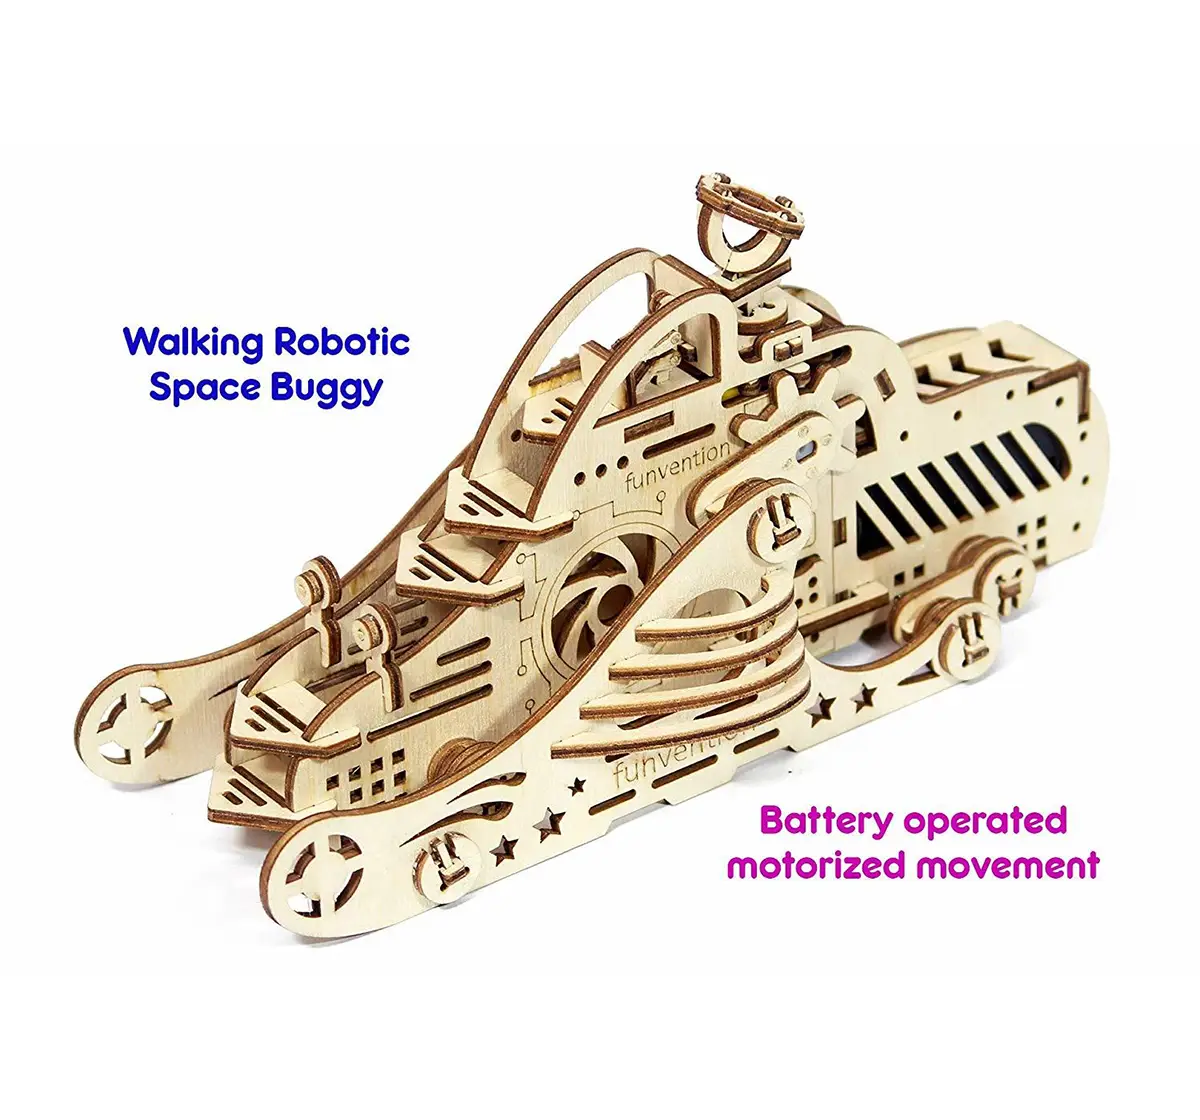 Funvention Space Buggy - Diy Walking Robotic Model (Prime Series) Stem for Kids Age 8Y+